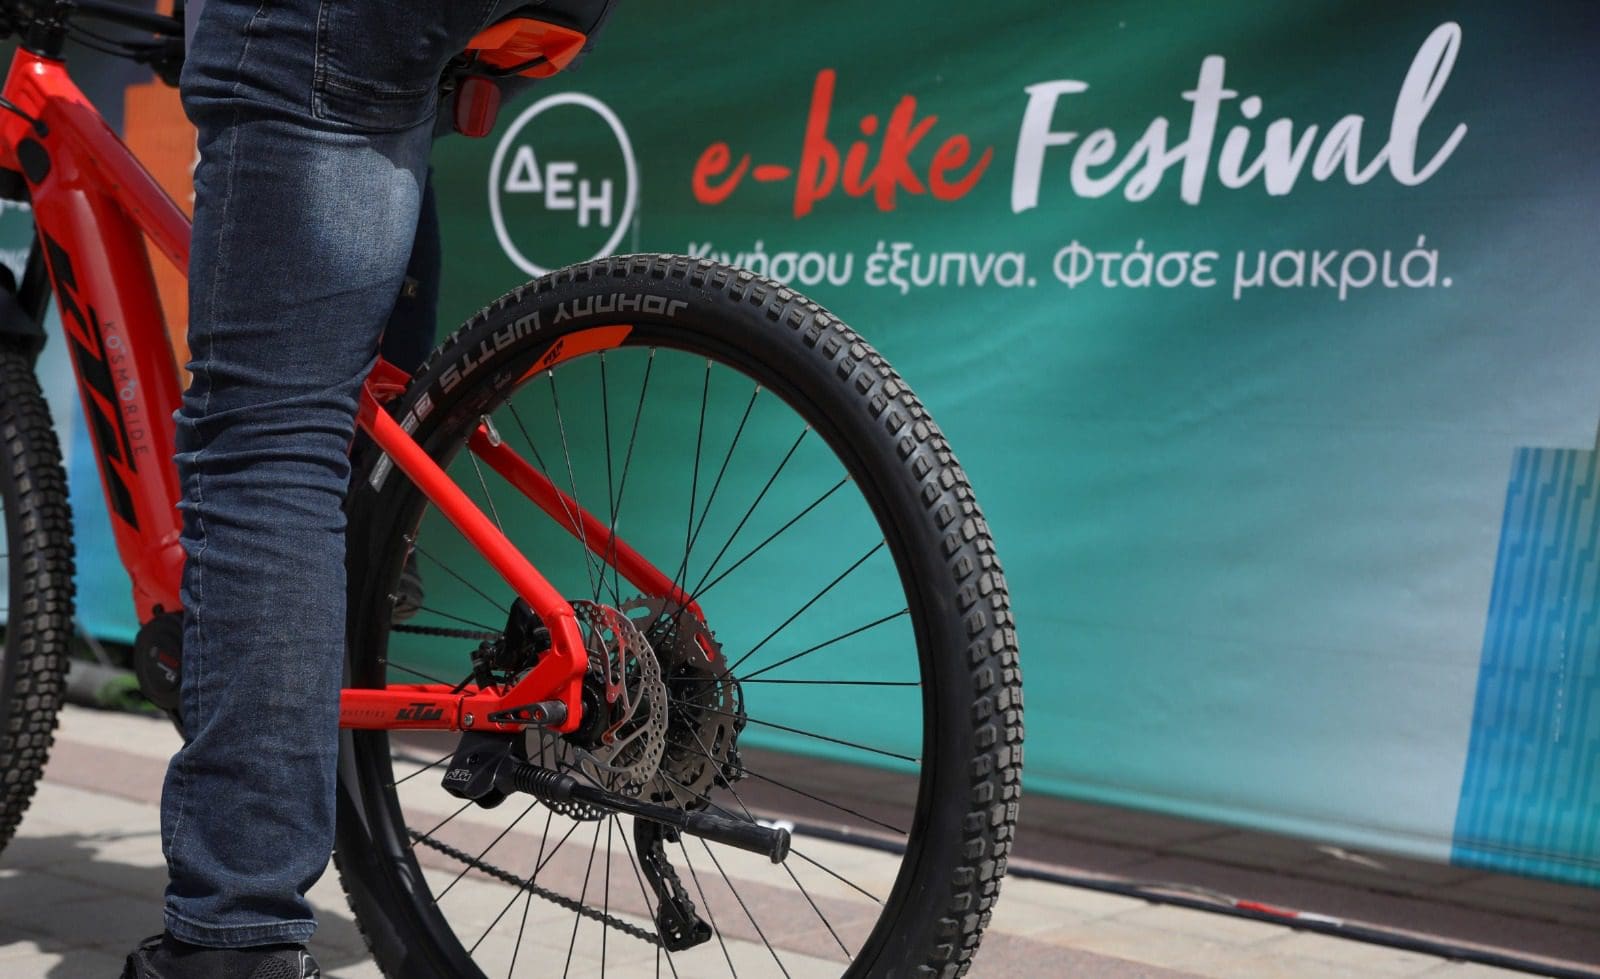 Eordaialive.com - Τα Νέα της Πτολεμαΐδας, Εορδαίας, Κοζάνης Το ΔΕΗ e-bike Festival επιστρέφει στις γειτονιές της Αθήνας